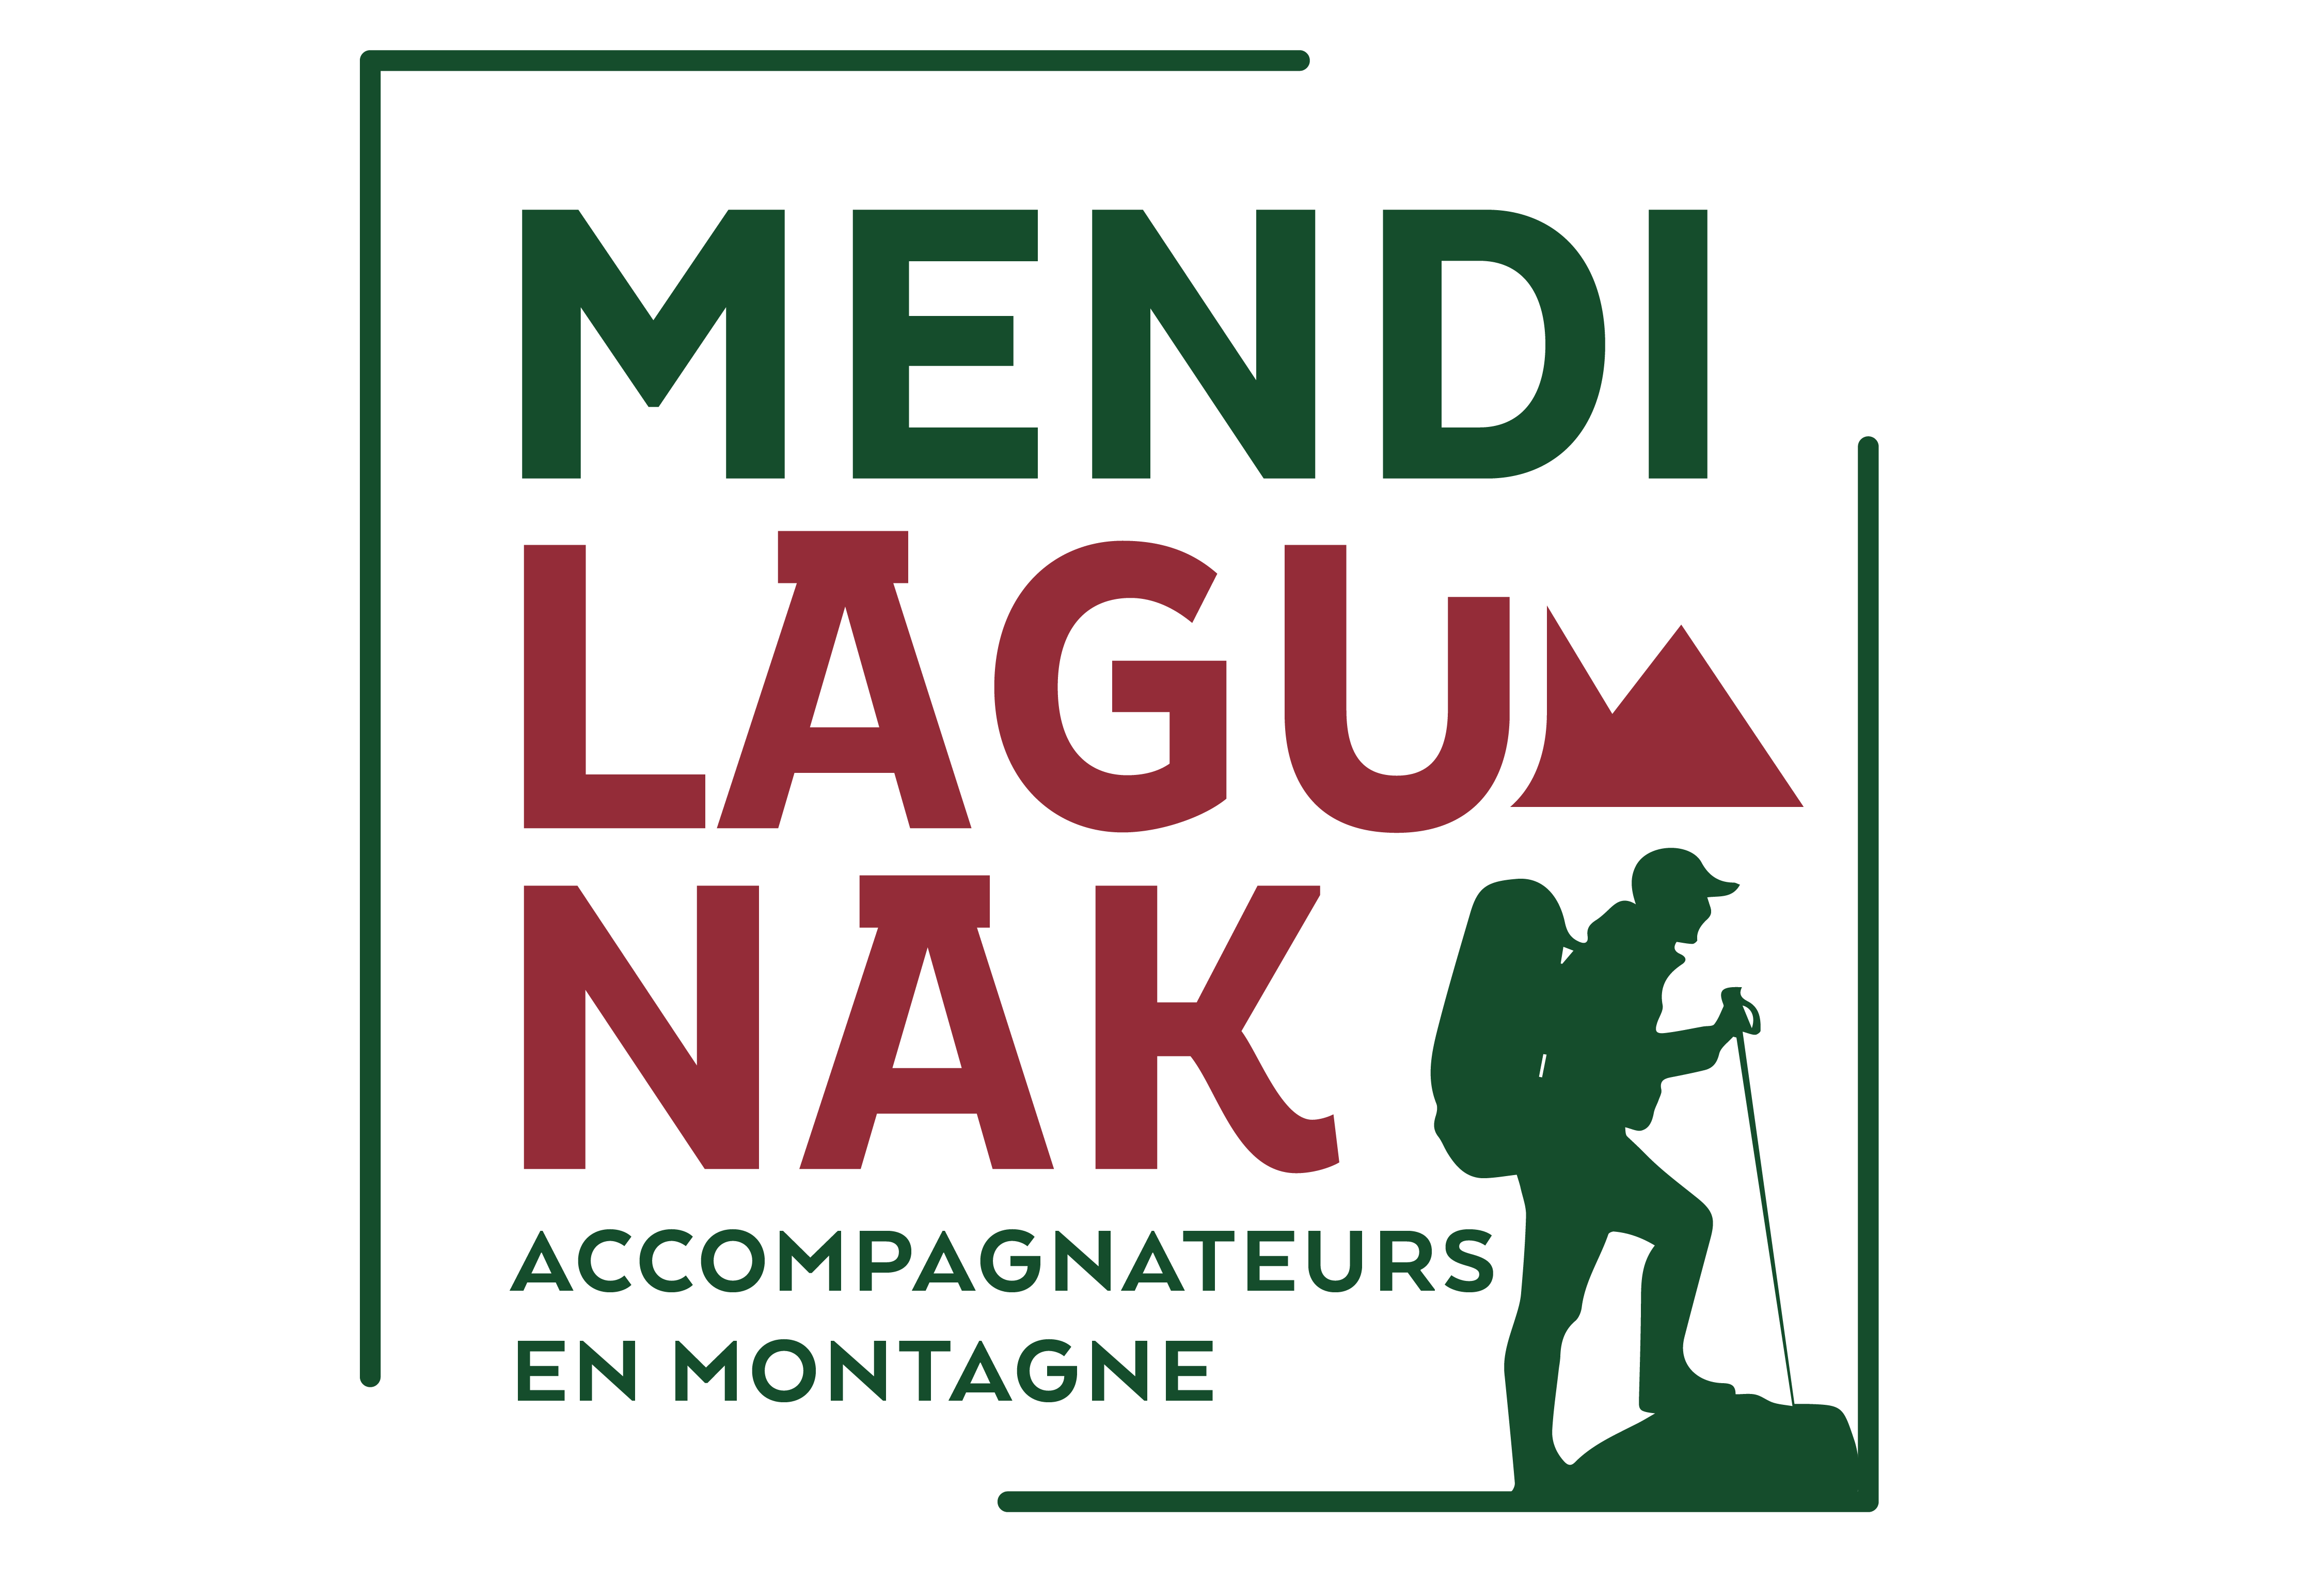 Mendi Lagunak Accompagnateur Montagne Pays Basque